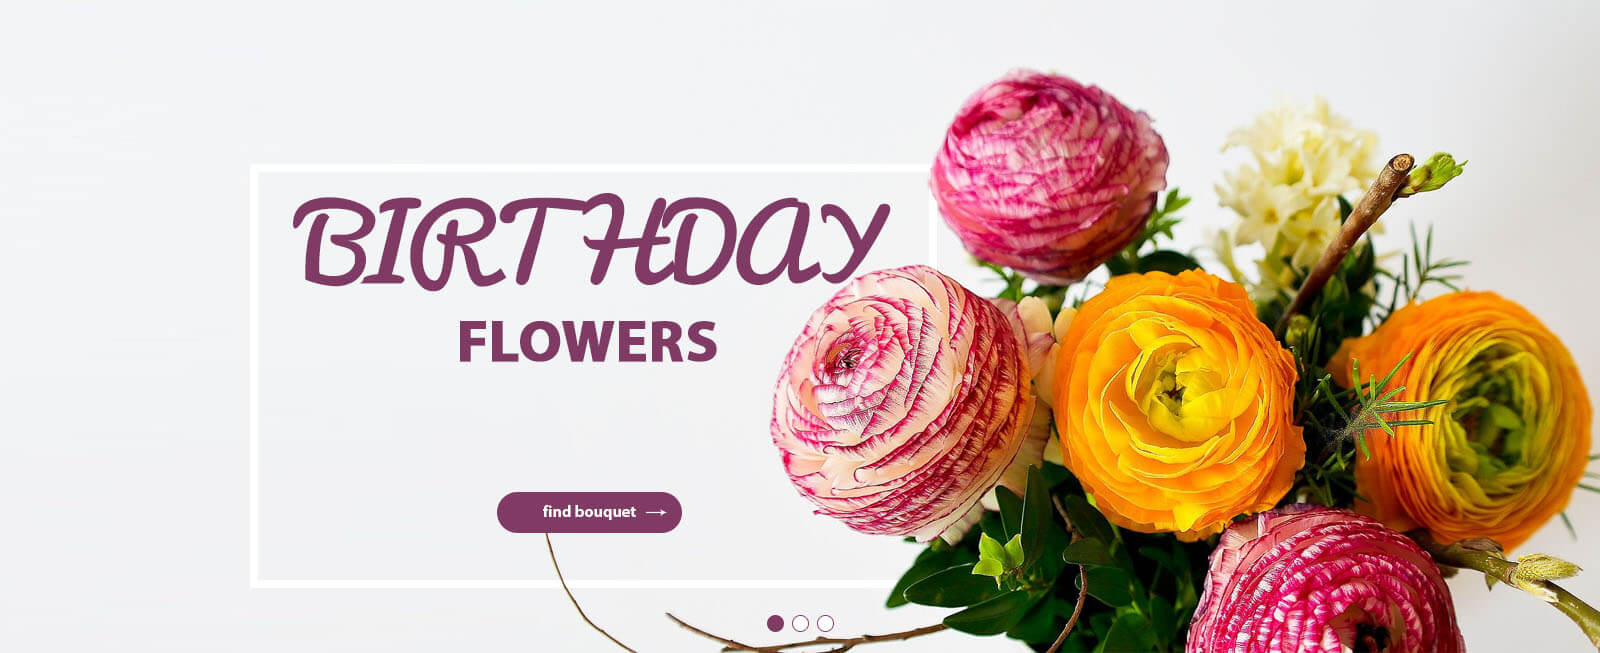 Send Birthday Flowers to Hammond Park